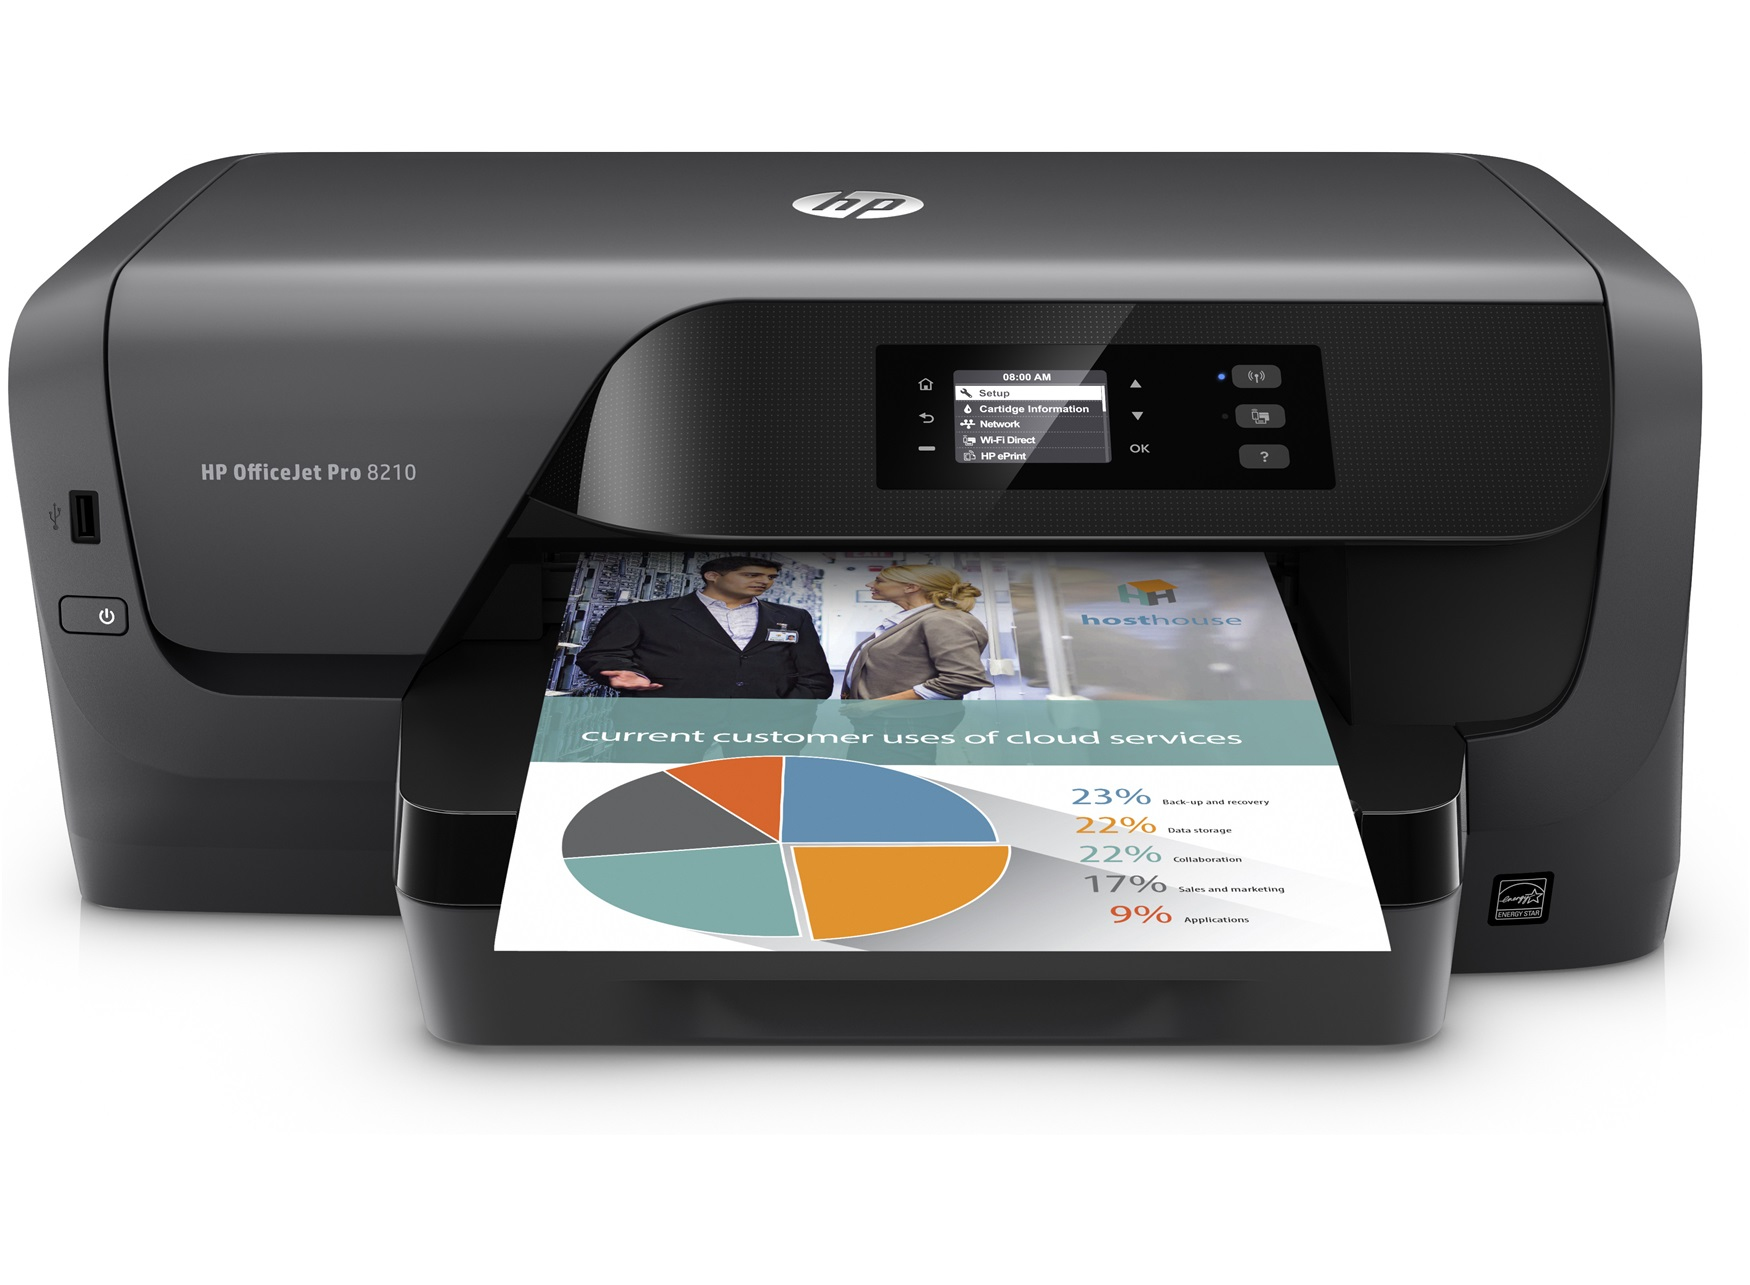 HP Officejet Pro 8210 inkjet printer